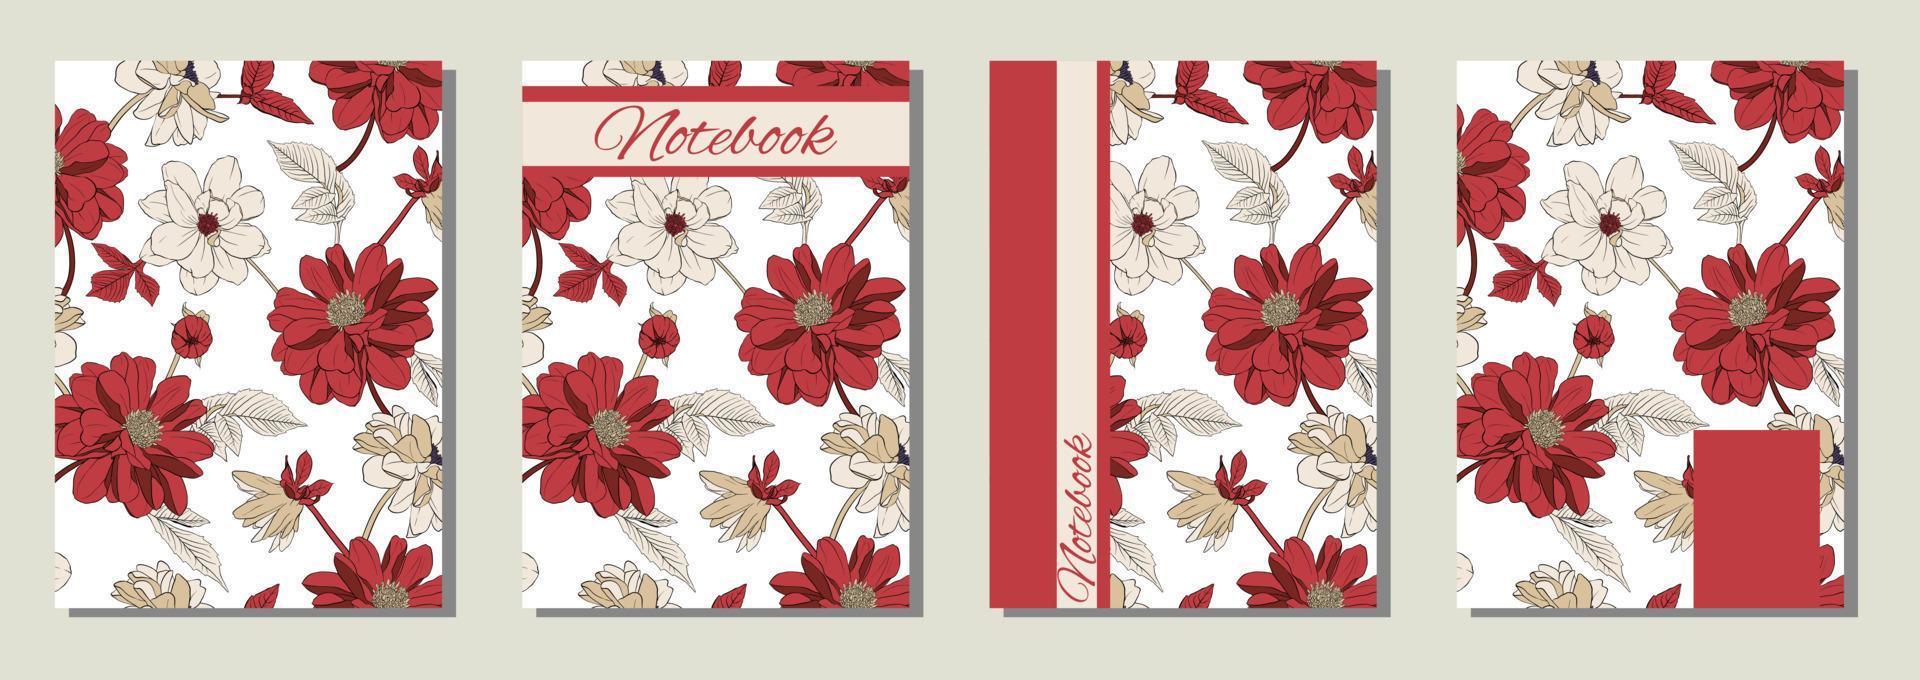 plantillas vectoriales para portadas. diseño de portada floral abstracta universal. adecuado para cuadernos, libros, diarios, catálogos, etc. vector